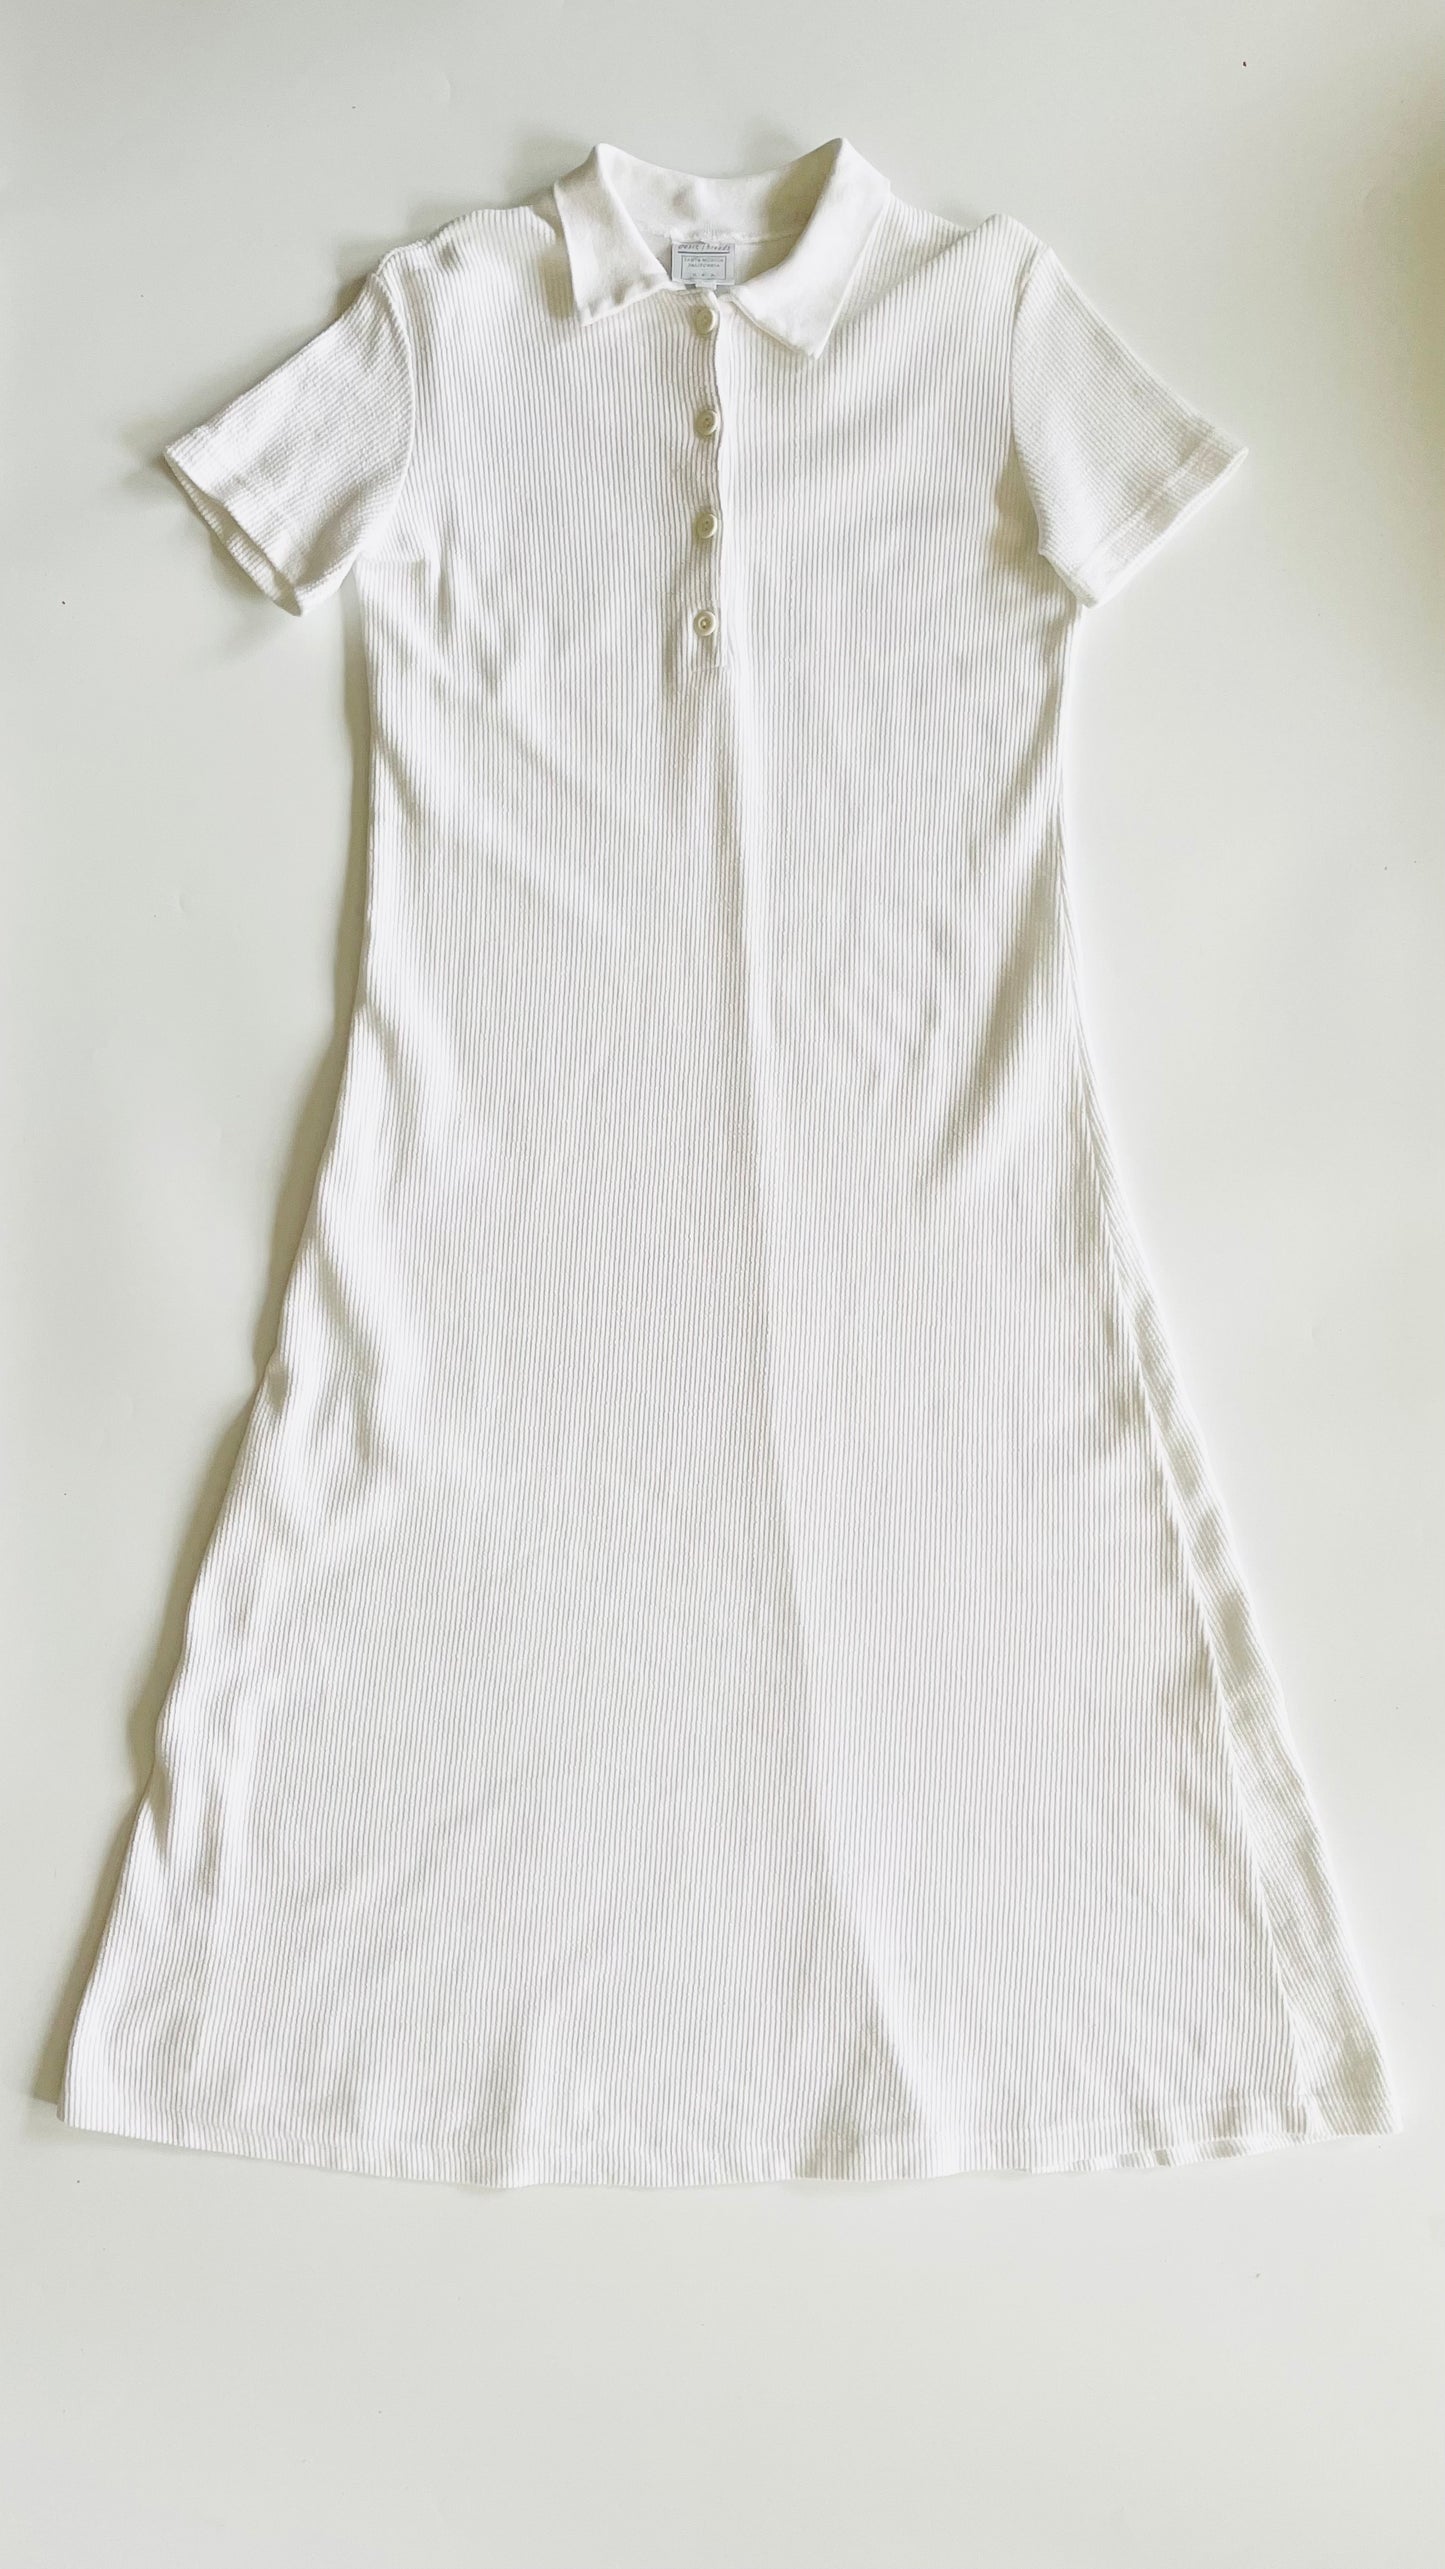 Vintage 90s white short sleeve maxi polo shirt dress - Size S